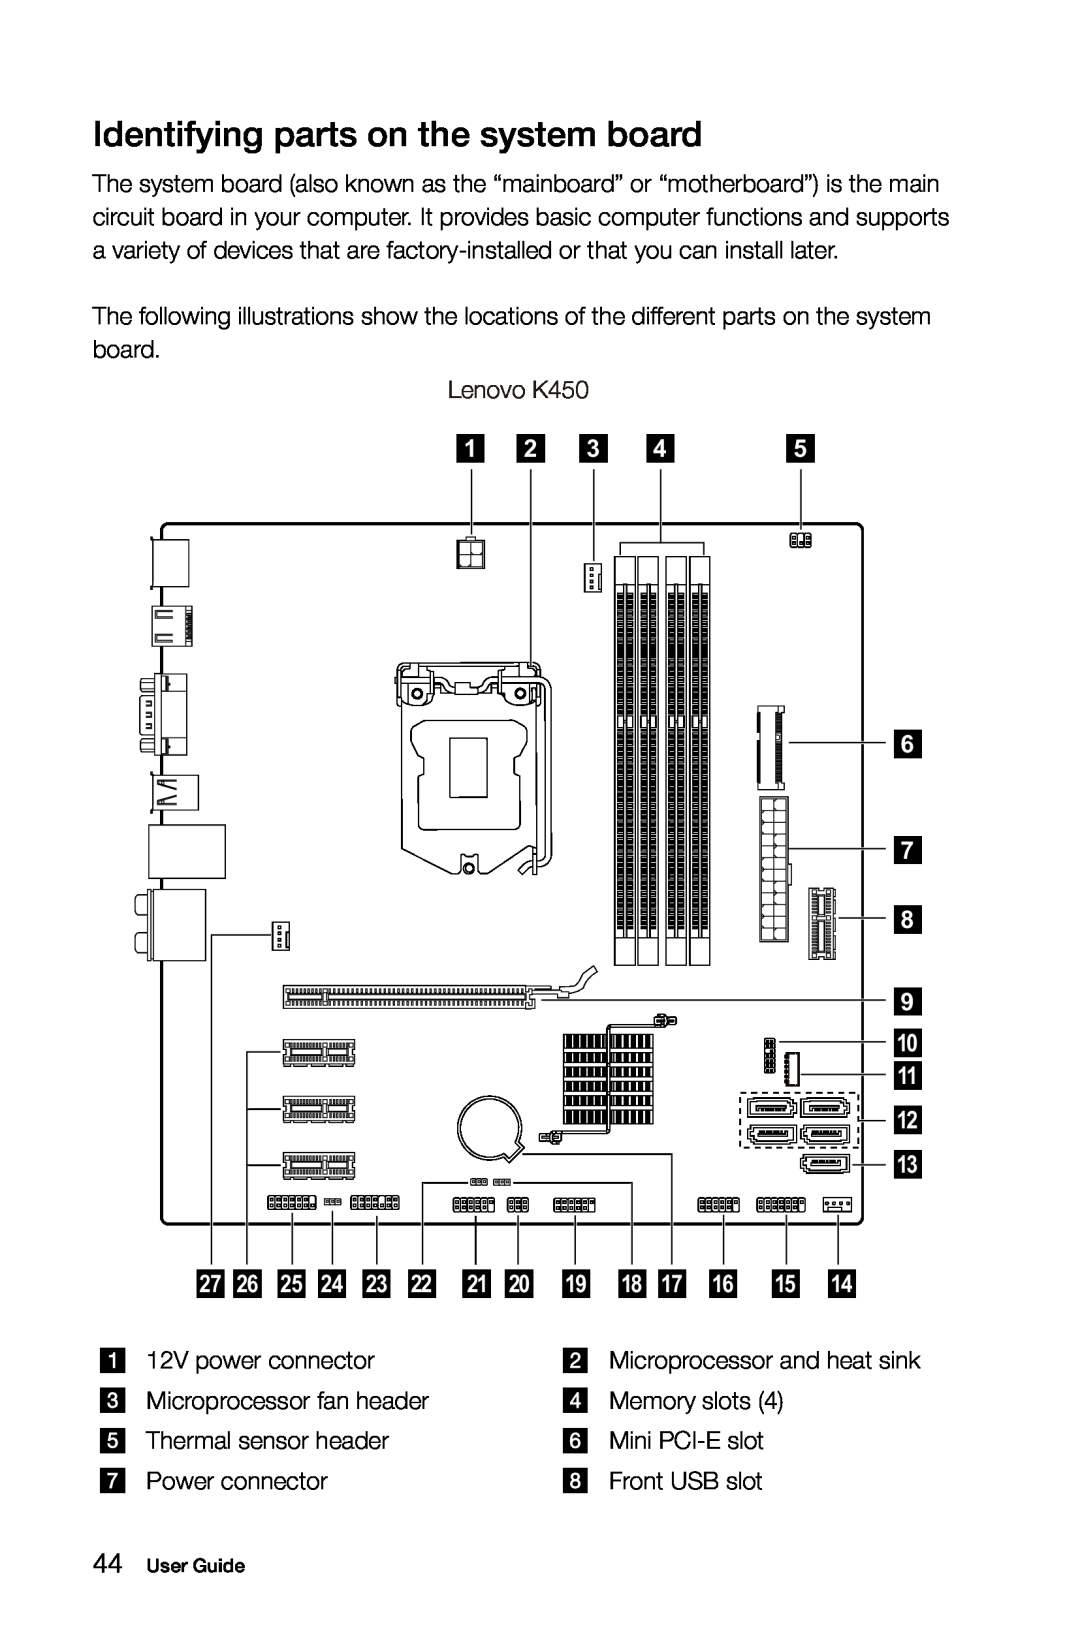 Lenovo 10090/2556/4748 [K415], 10121/90A1 [K450 ES] manual Identifying parts on the system board, Lenovo K450 